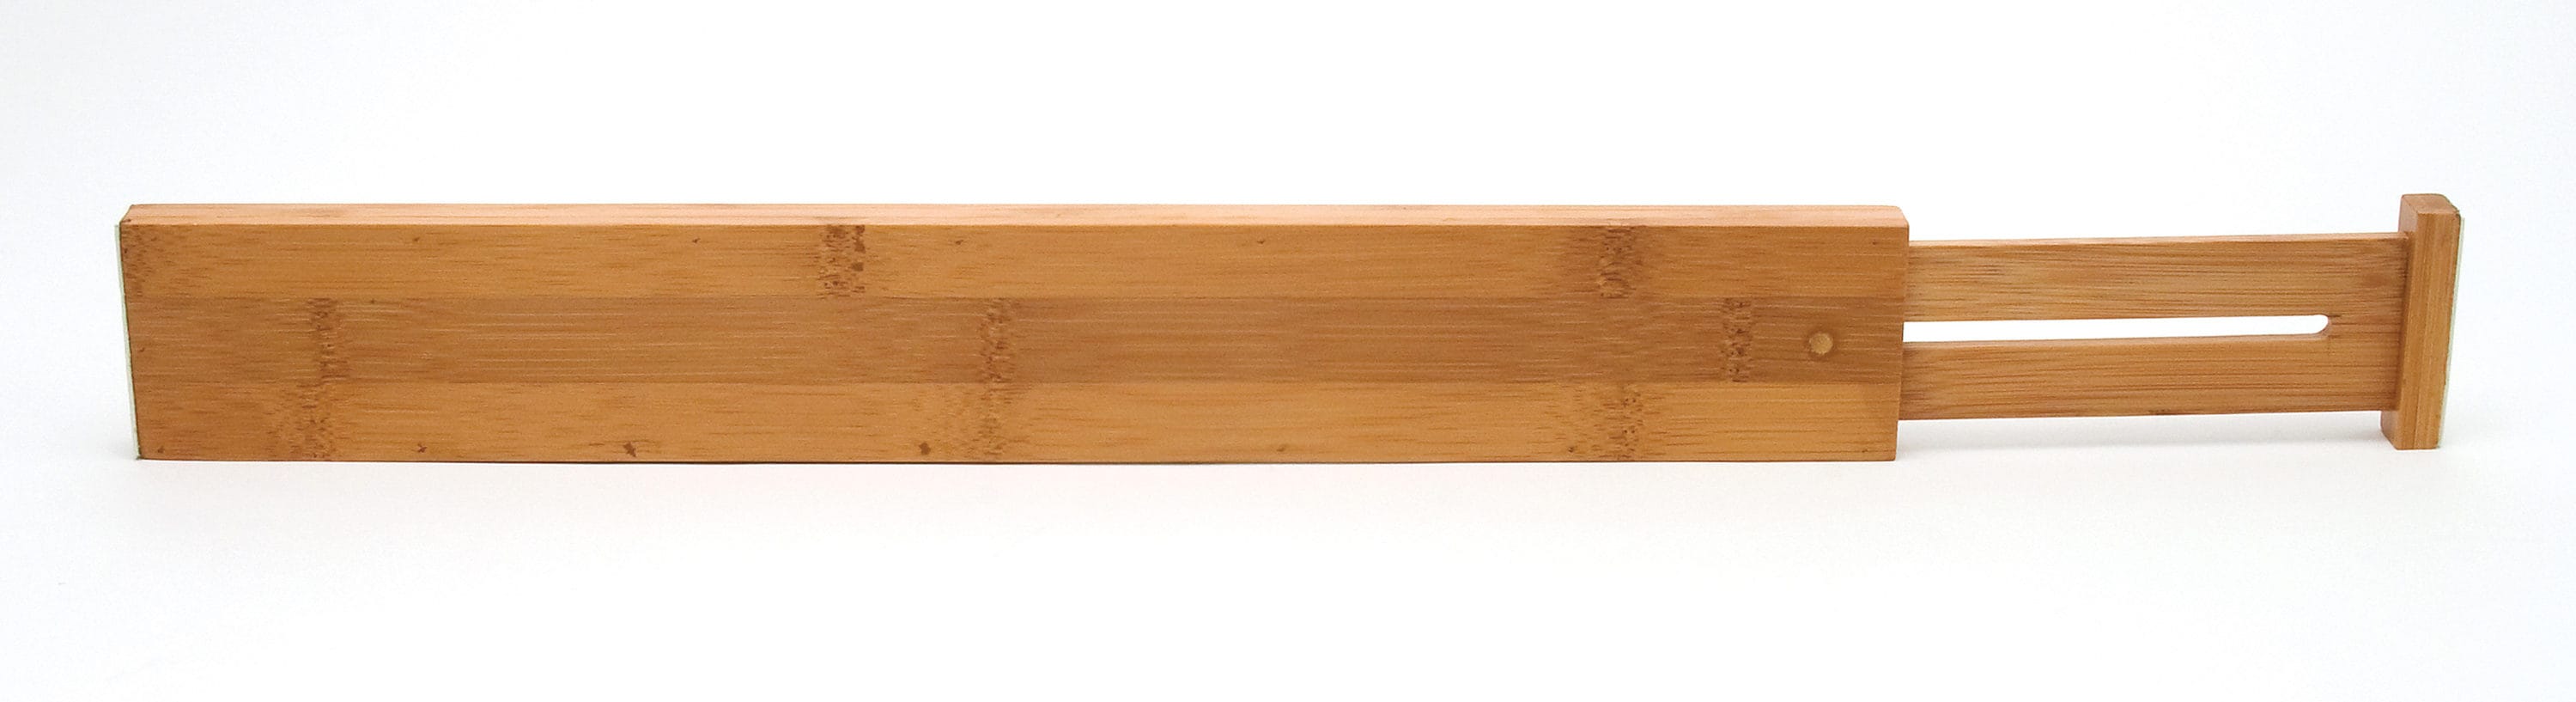 Lipper International Bamboo Kitchen Drawer Dividers - Set of 2